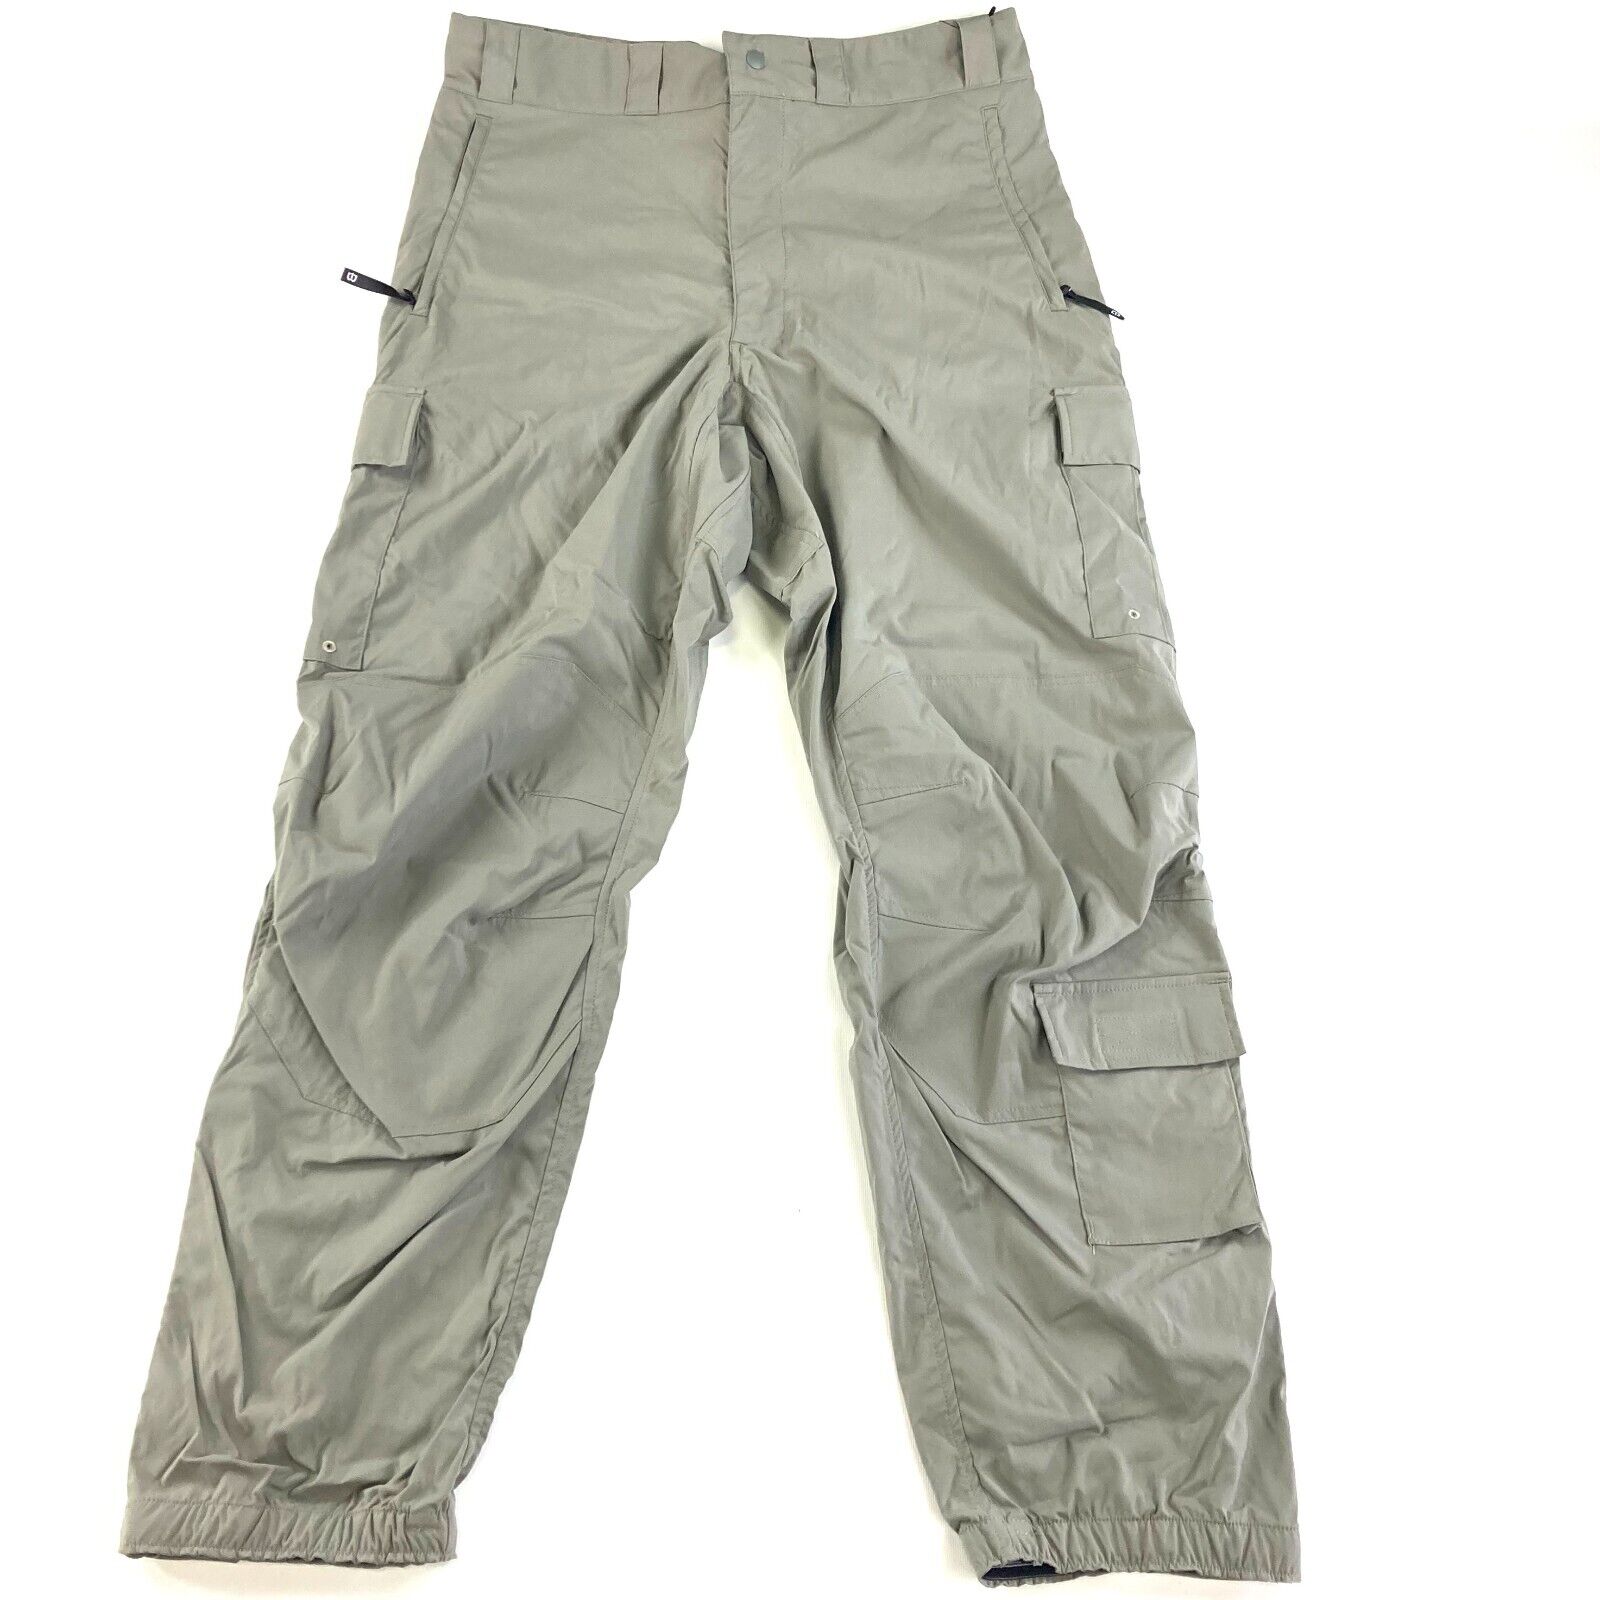 Beyond L5 Glacier Pants Alpha Green Level 5 Waterproof Trousers LARGE REGULAR